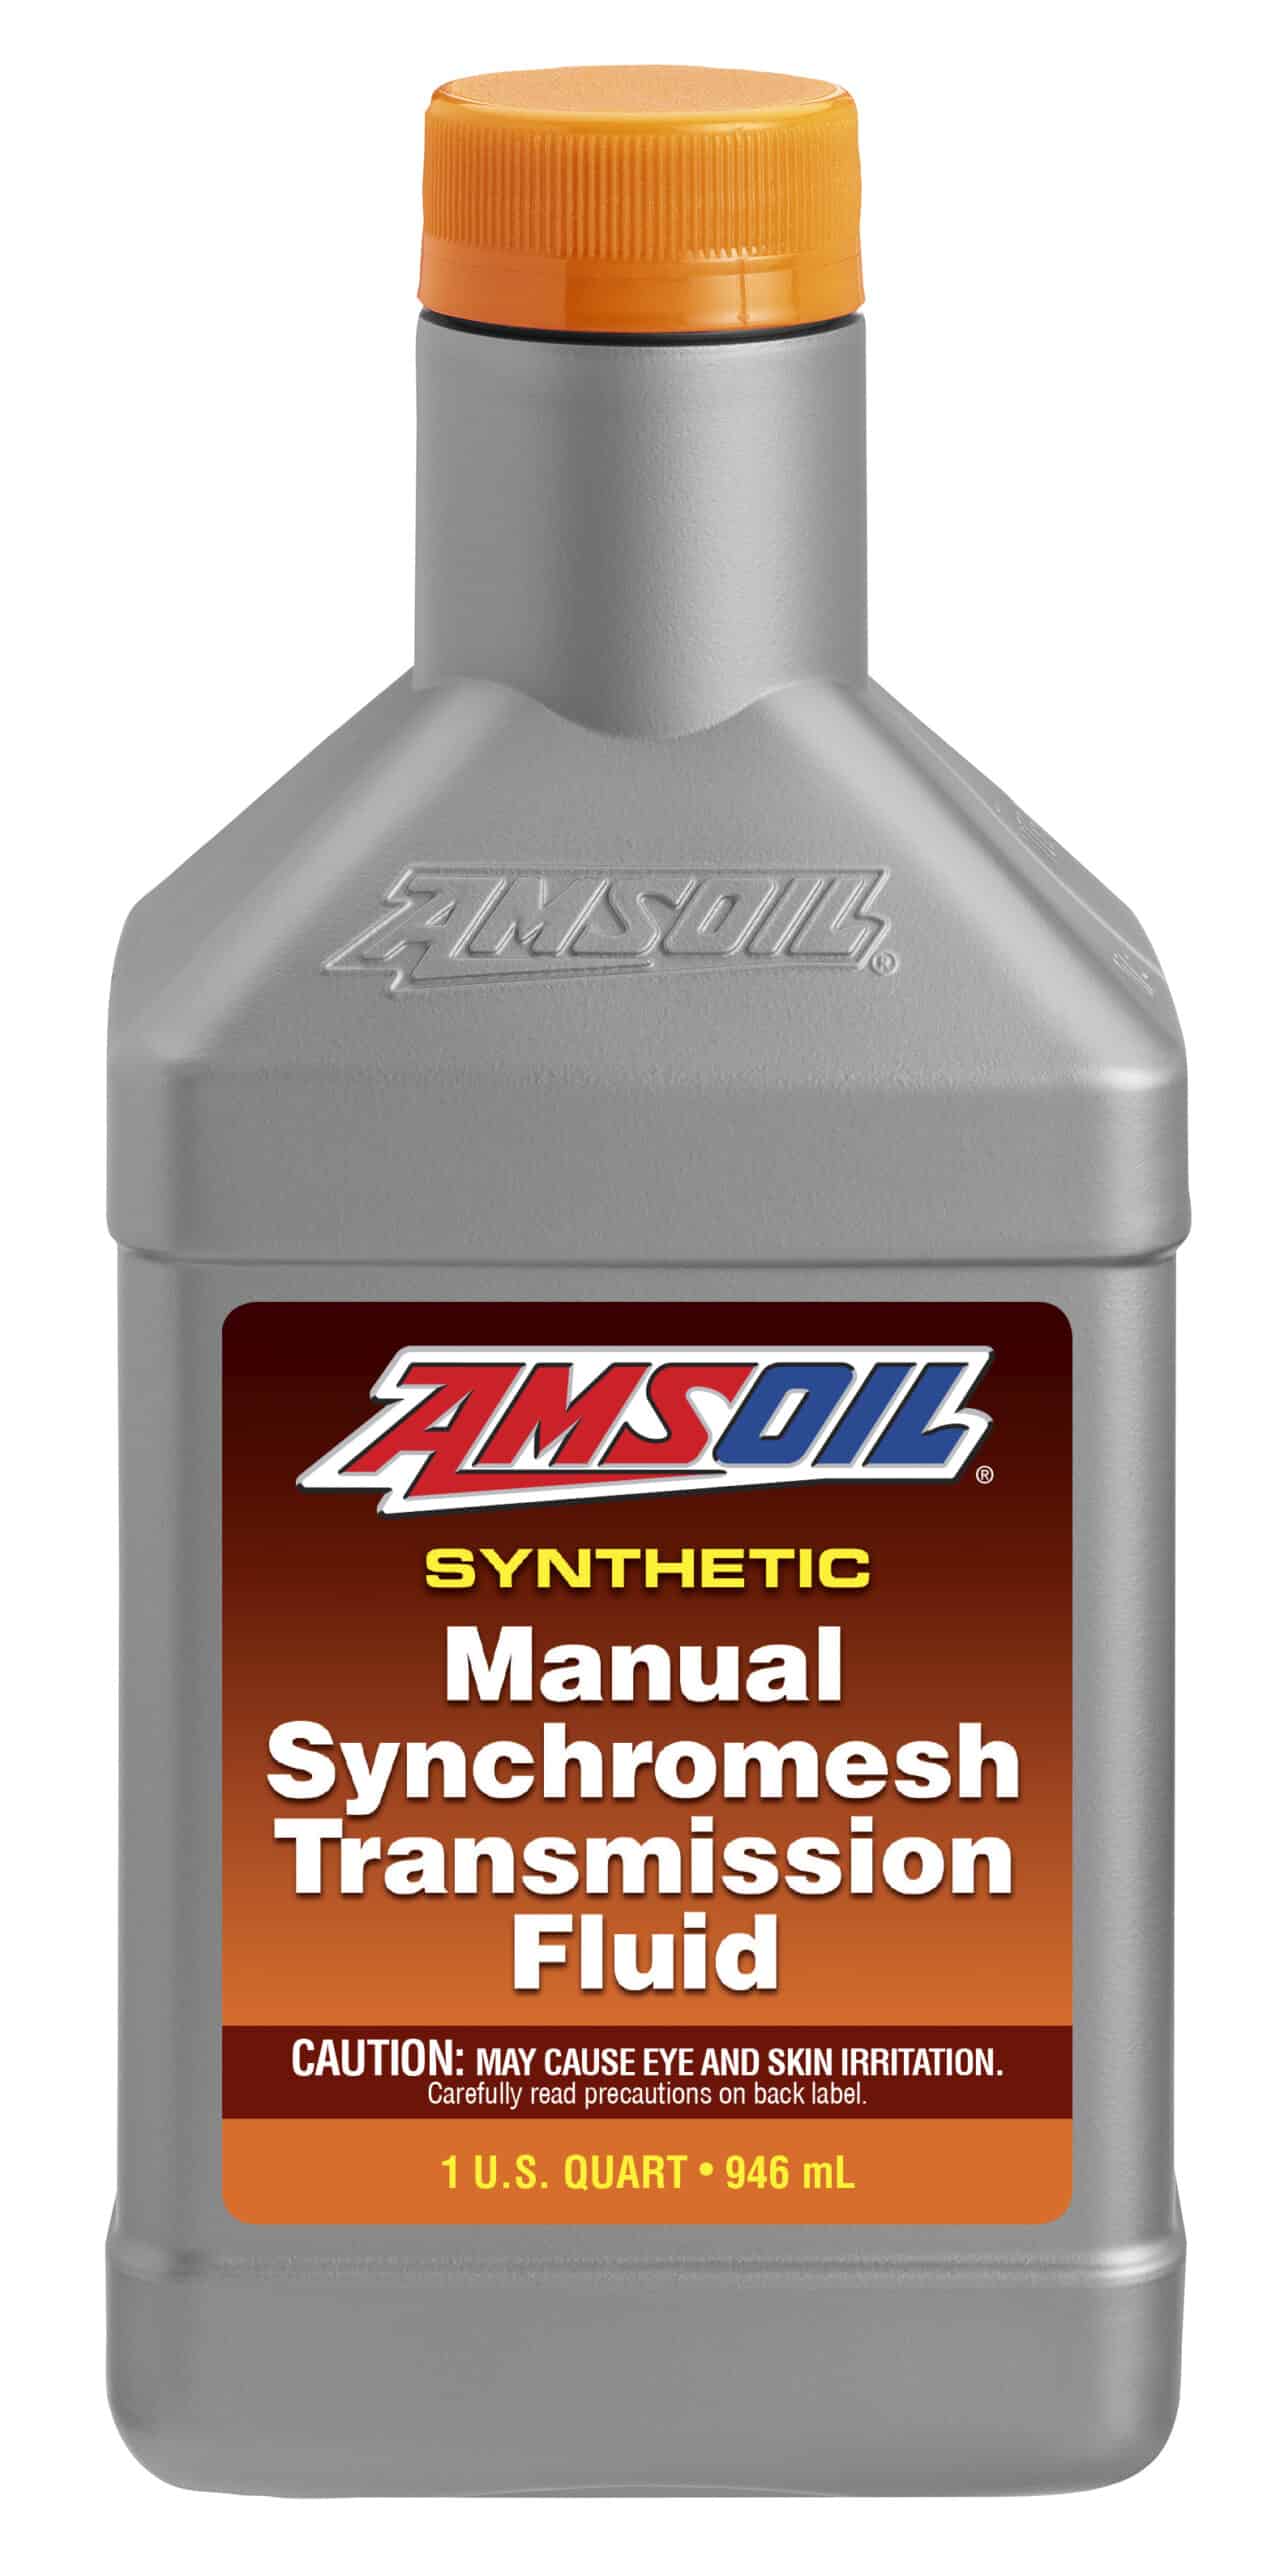 Synthetic Manual Synchromesh Transmission Fluid